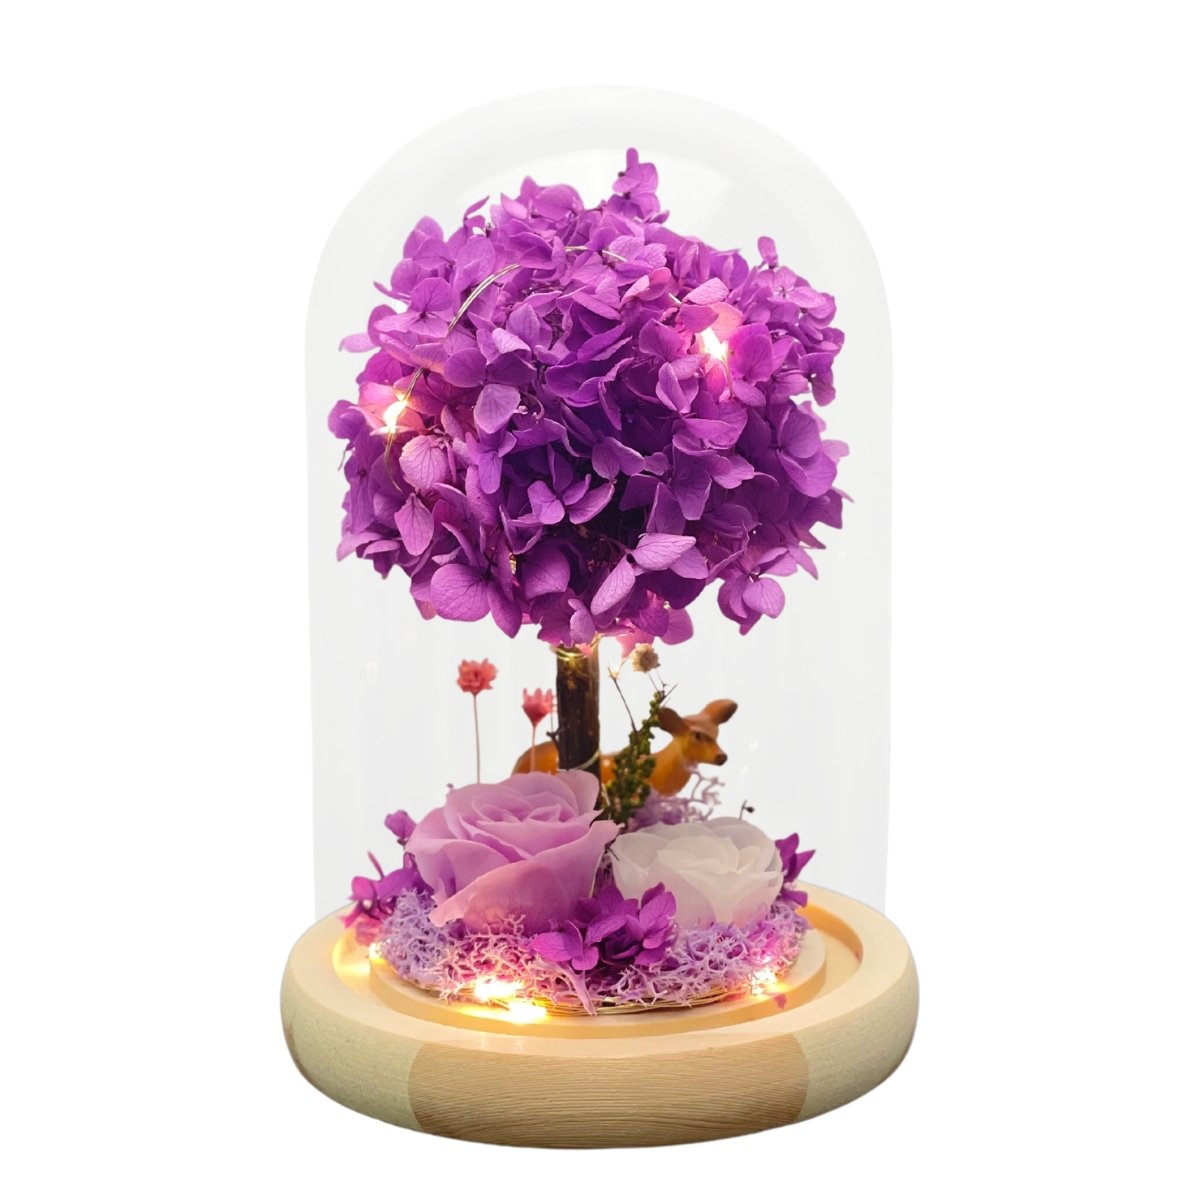 Hydarium Dome - Flower - Purple あじさい - Preserved Flowers & Fresh Flower Florist Gift Store